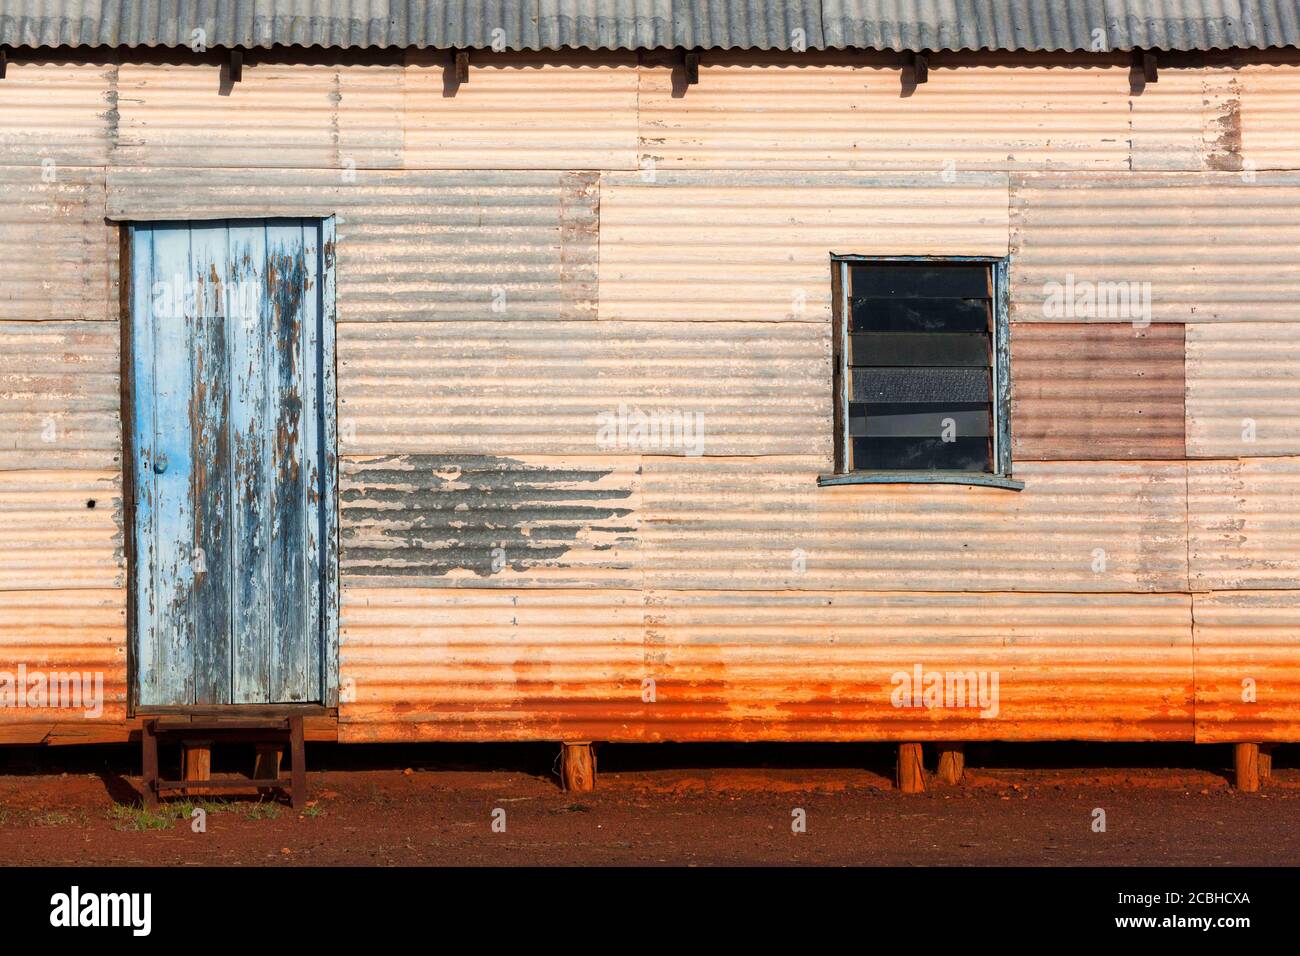 Corrugated iron building, Lake Mason homestead, Central Midlands, Western Australia Stock Photo